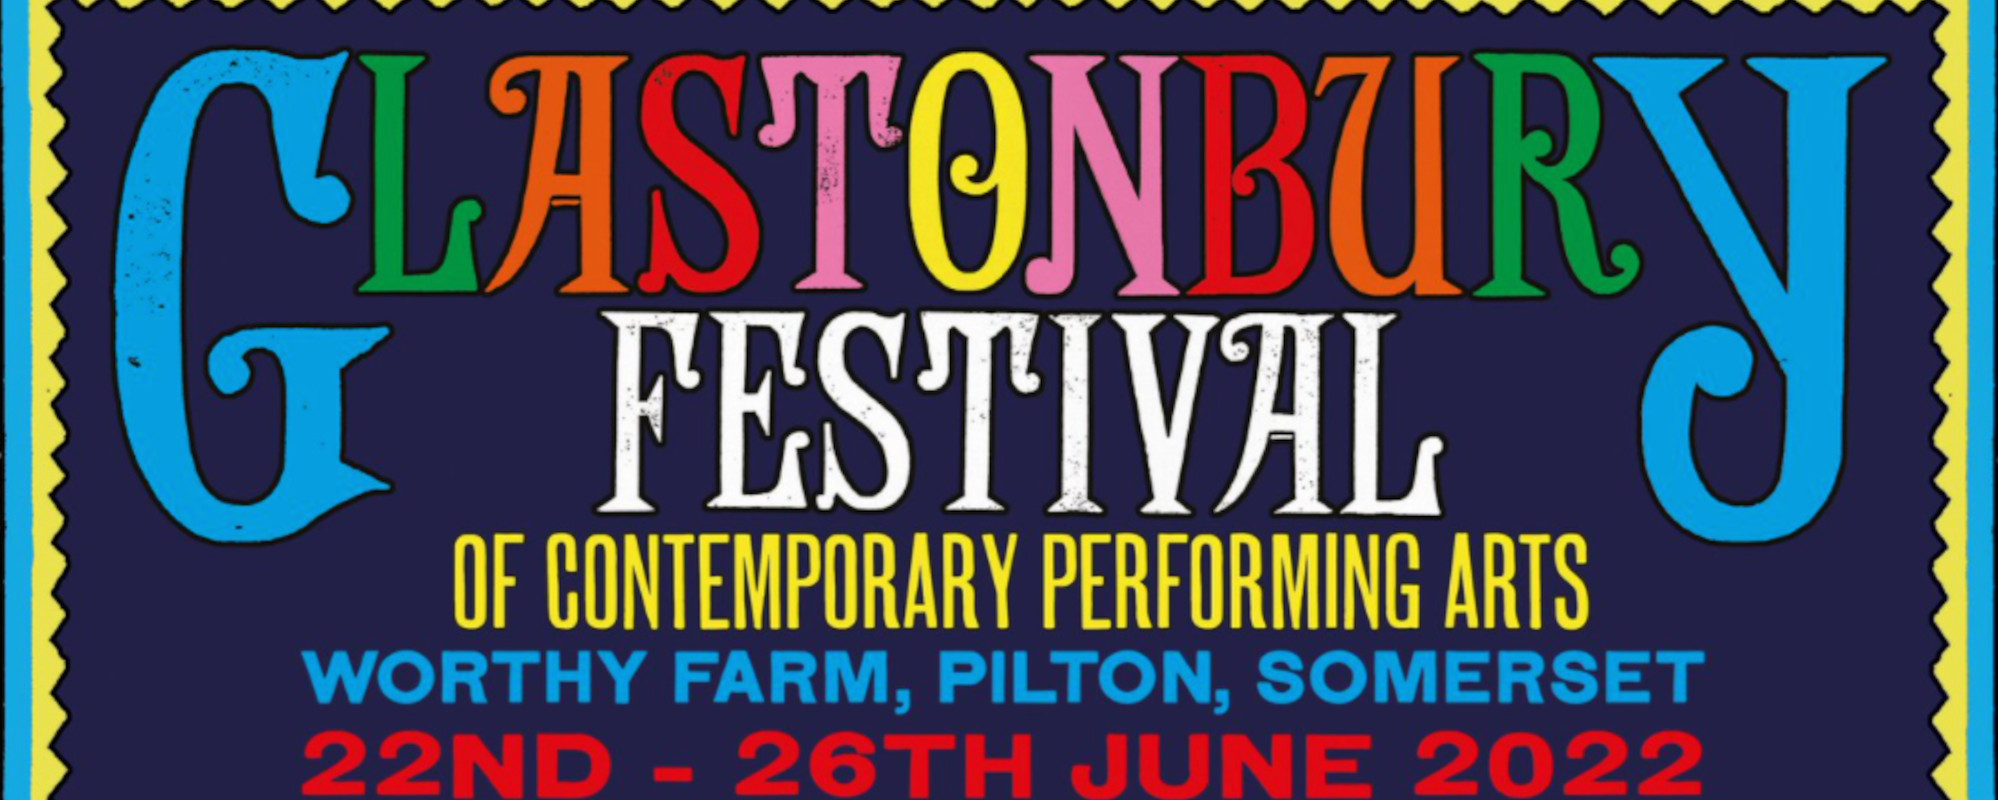 Glastonbury Festival Announces Headliners Paul McCartney, Kendrick Lamar, & Diana Ross